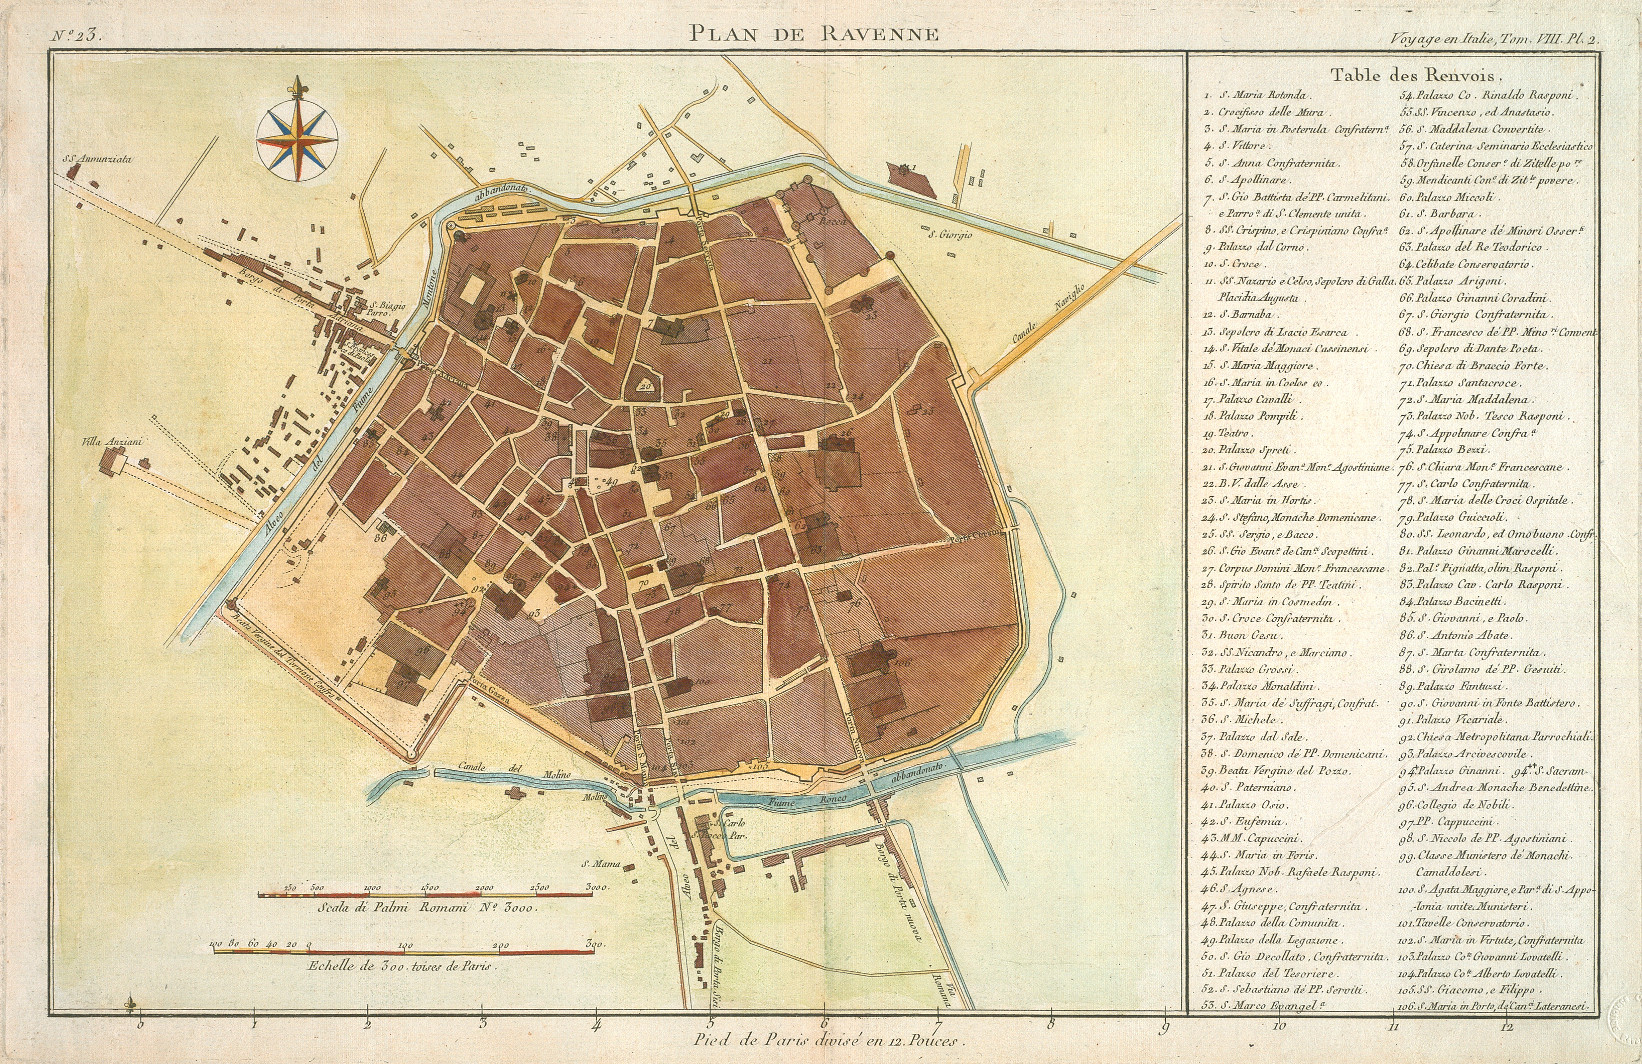 Plan de Ravenne
autore: ignoto
data: 1790
dimensioni: cm 22x36
contenuta in: J-J de La Lande, Voyage en Italie, VII, Desaint, Paris 1786